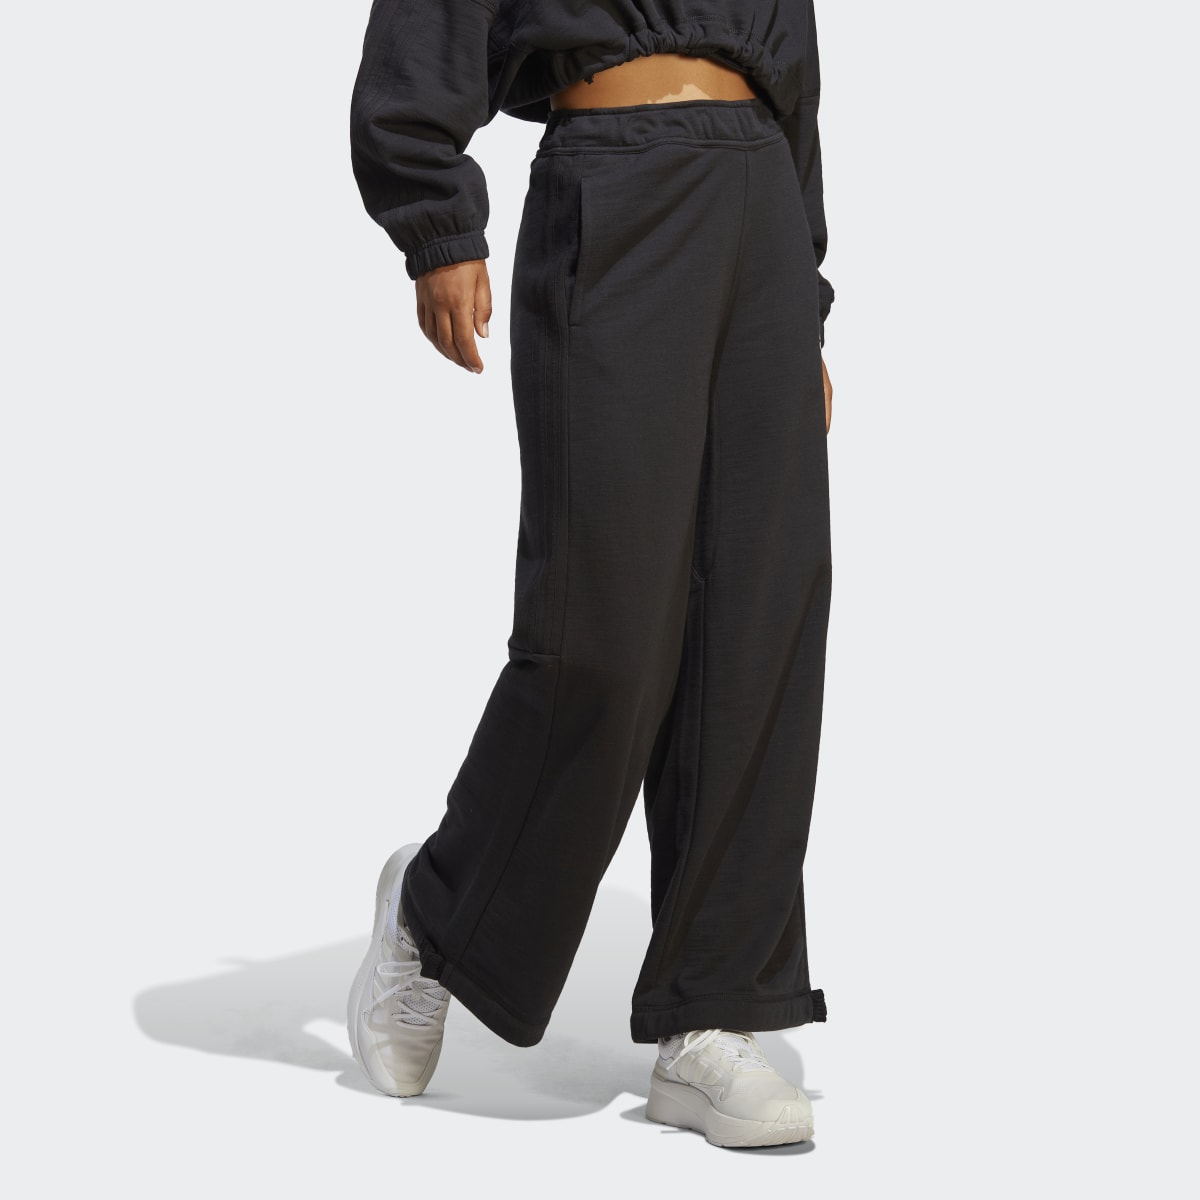 Adidas Dance Versatile Knit Pants. 3